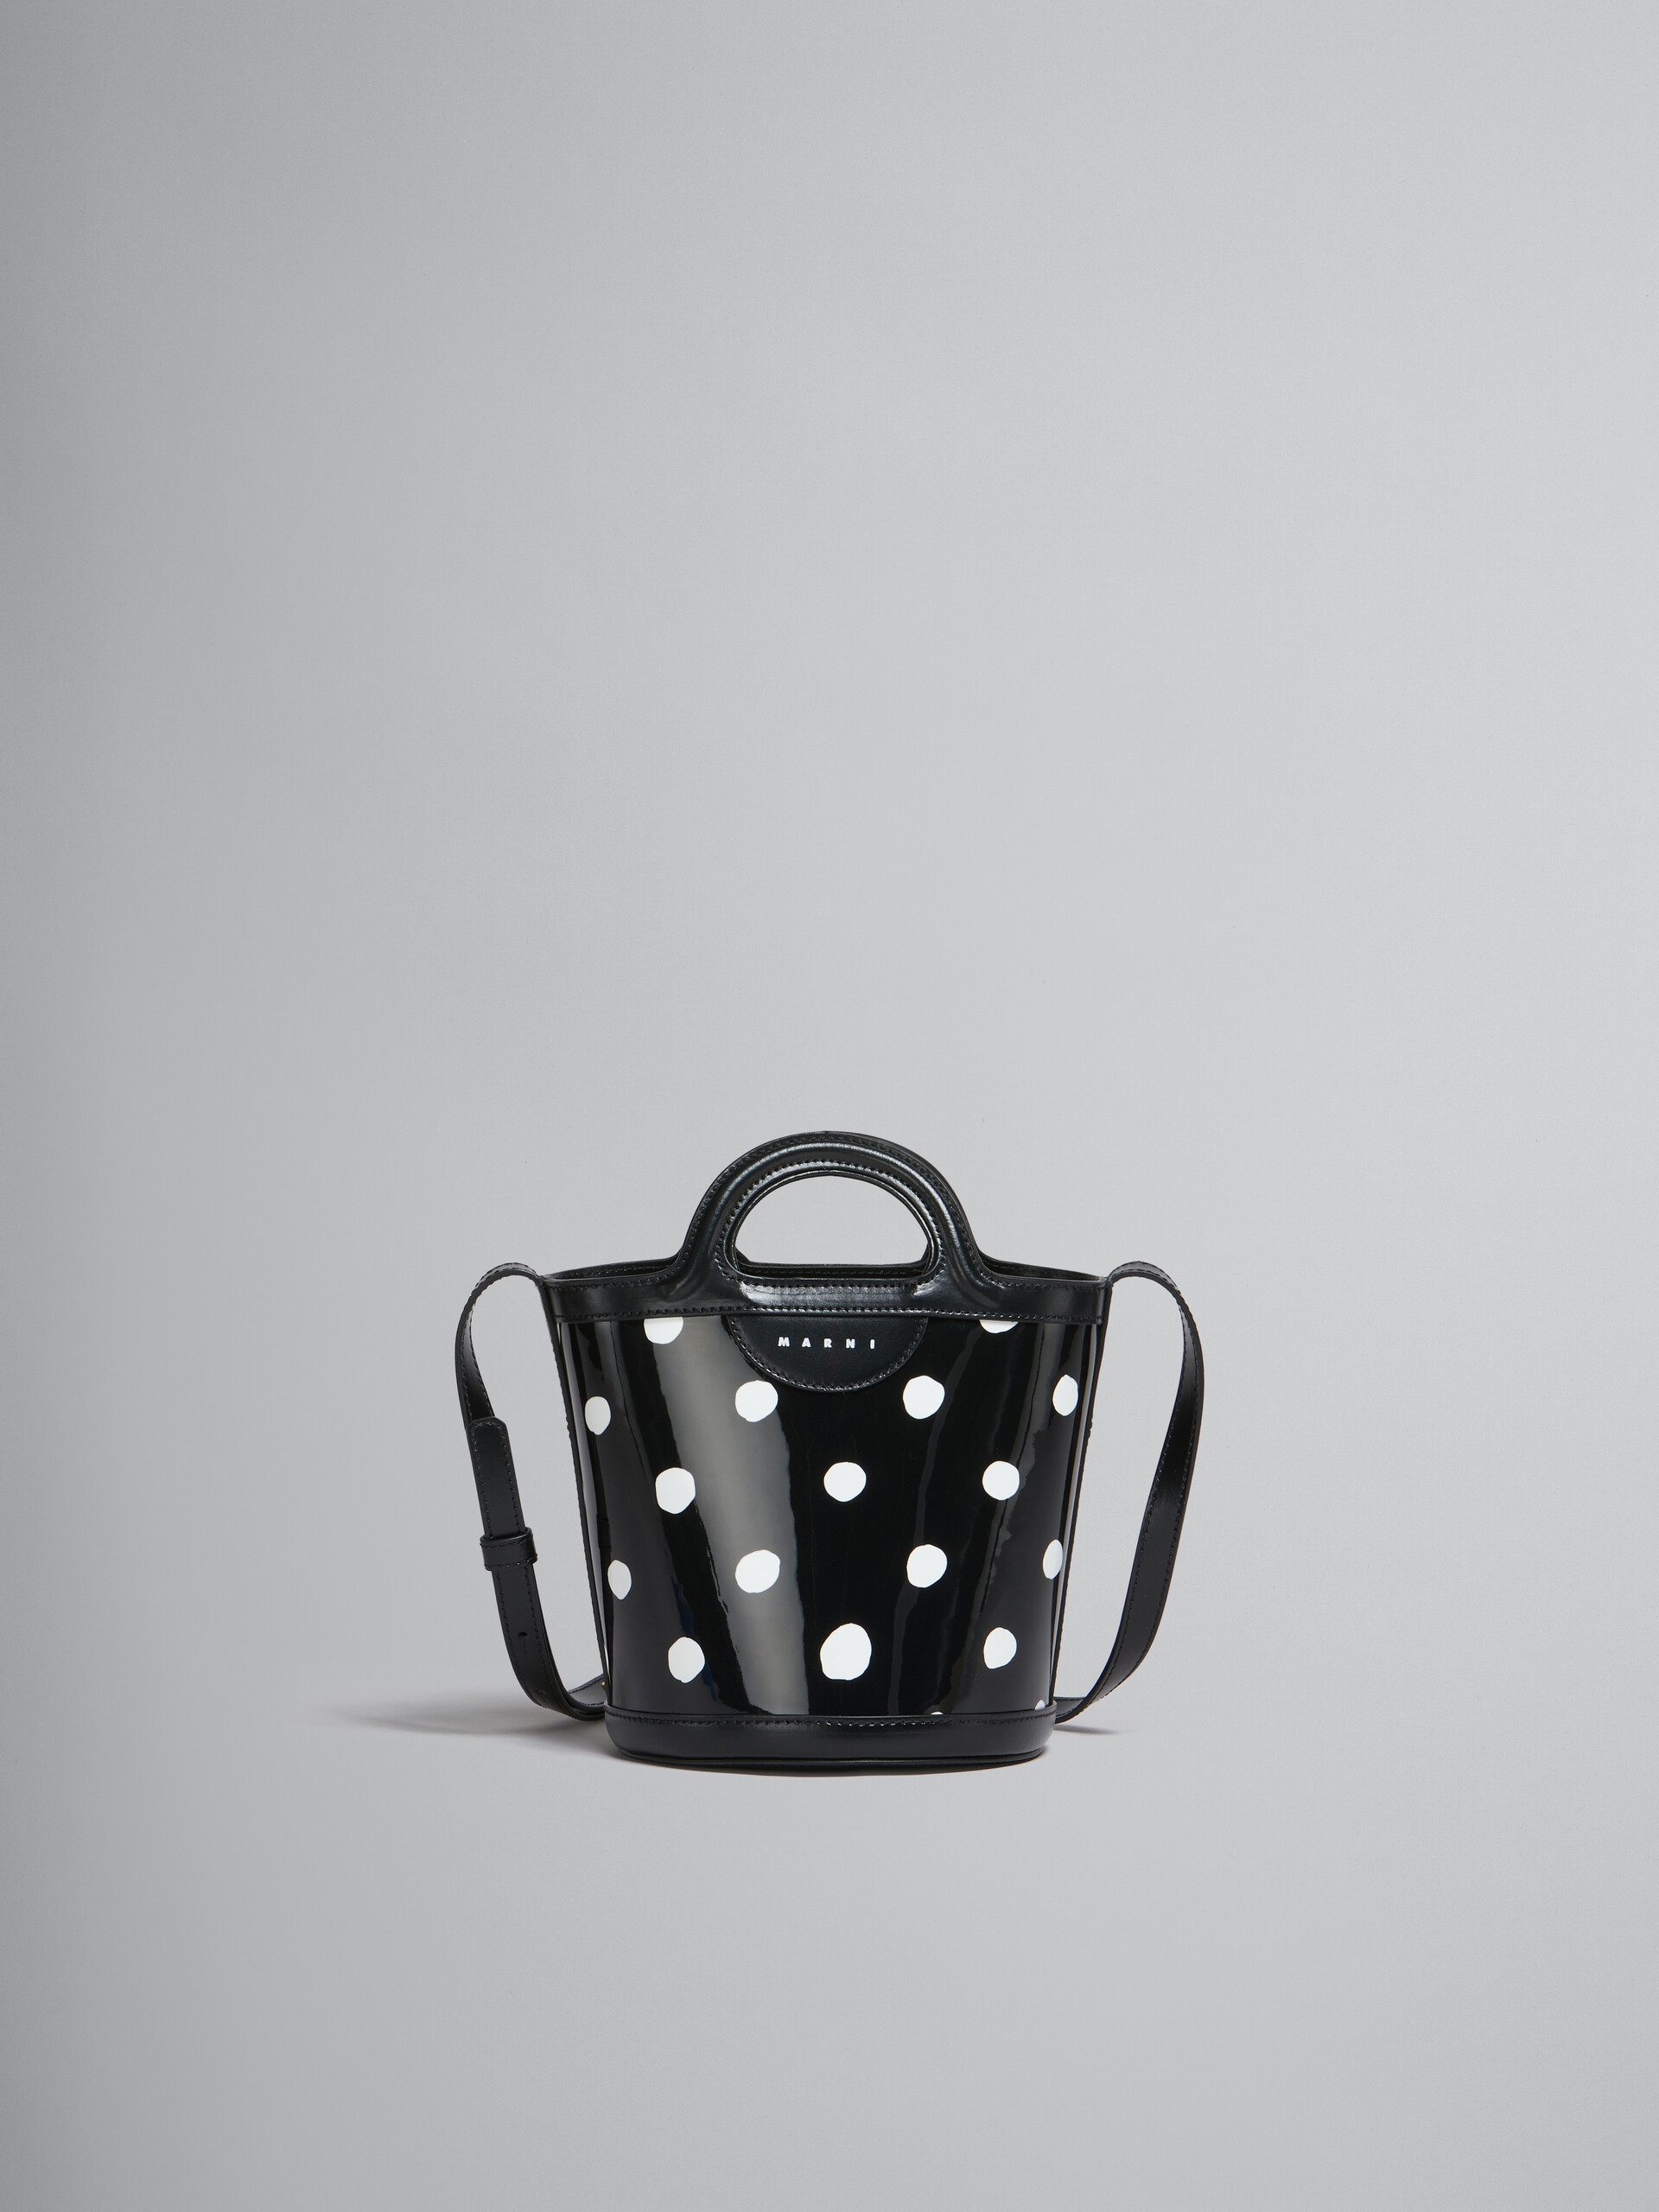 Black and white polka-dot patent leather Tropicalia mini bucket bag